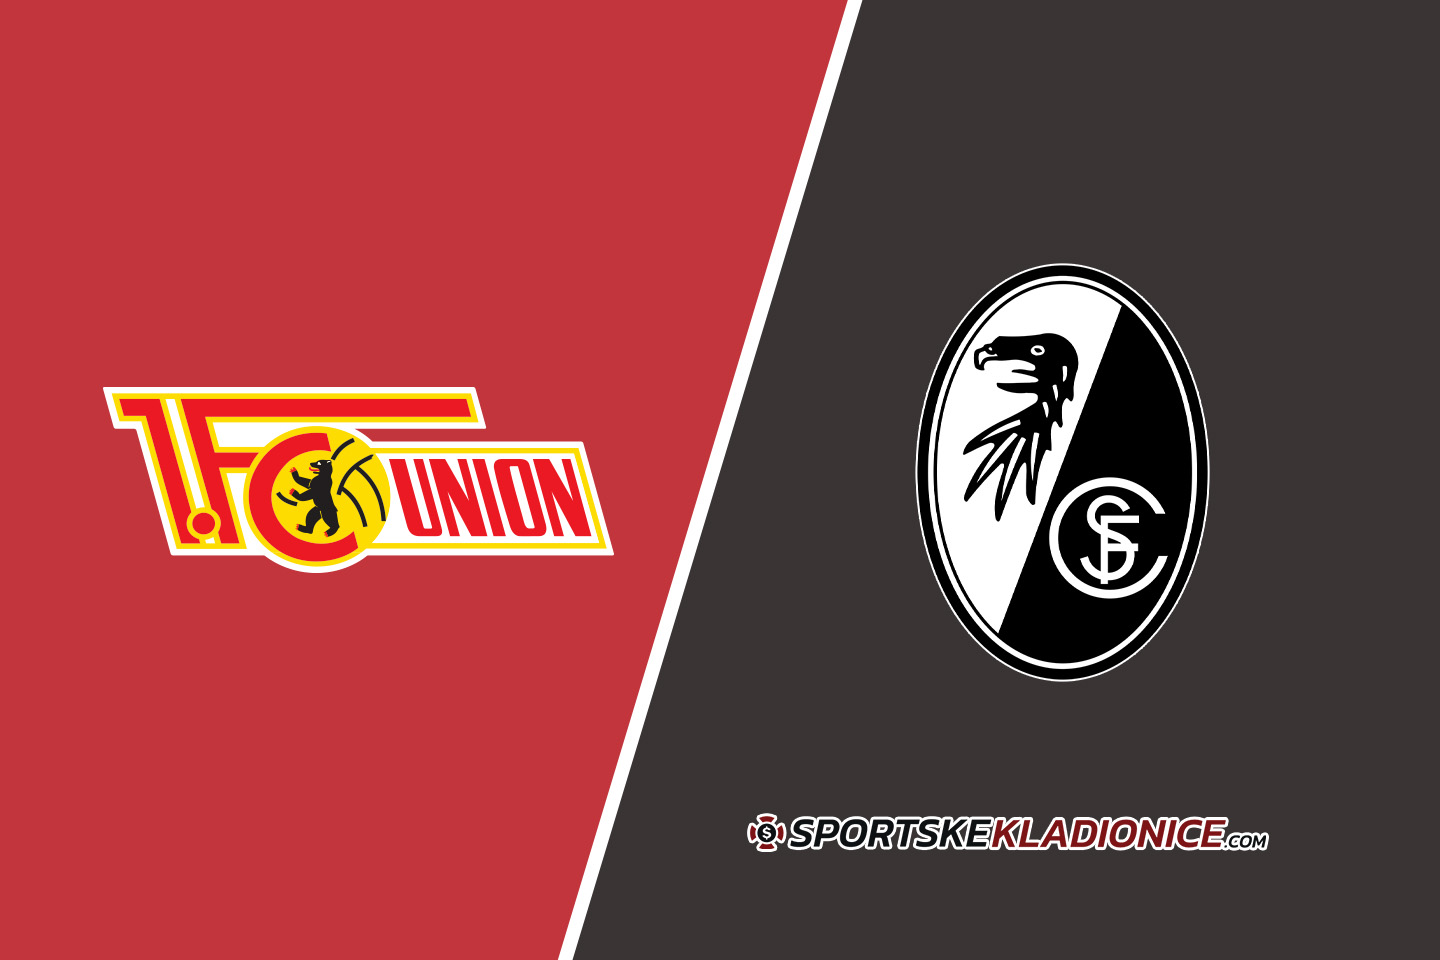 Union Berlin vs Freiburg